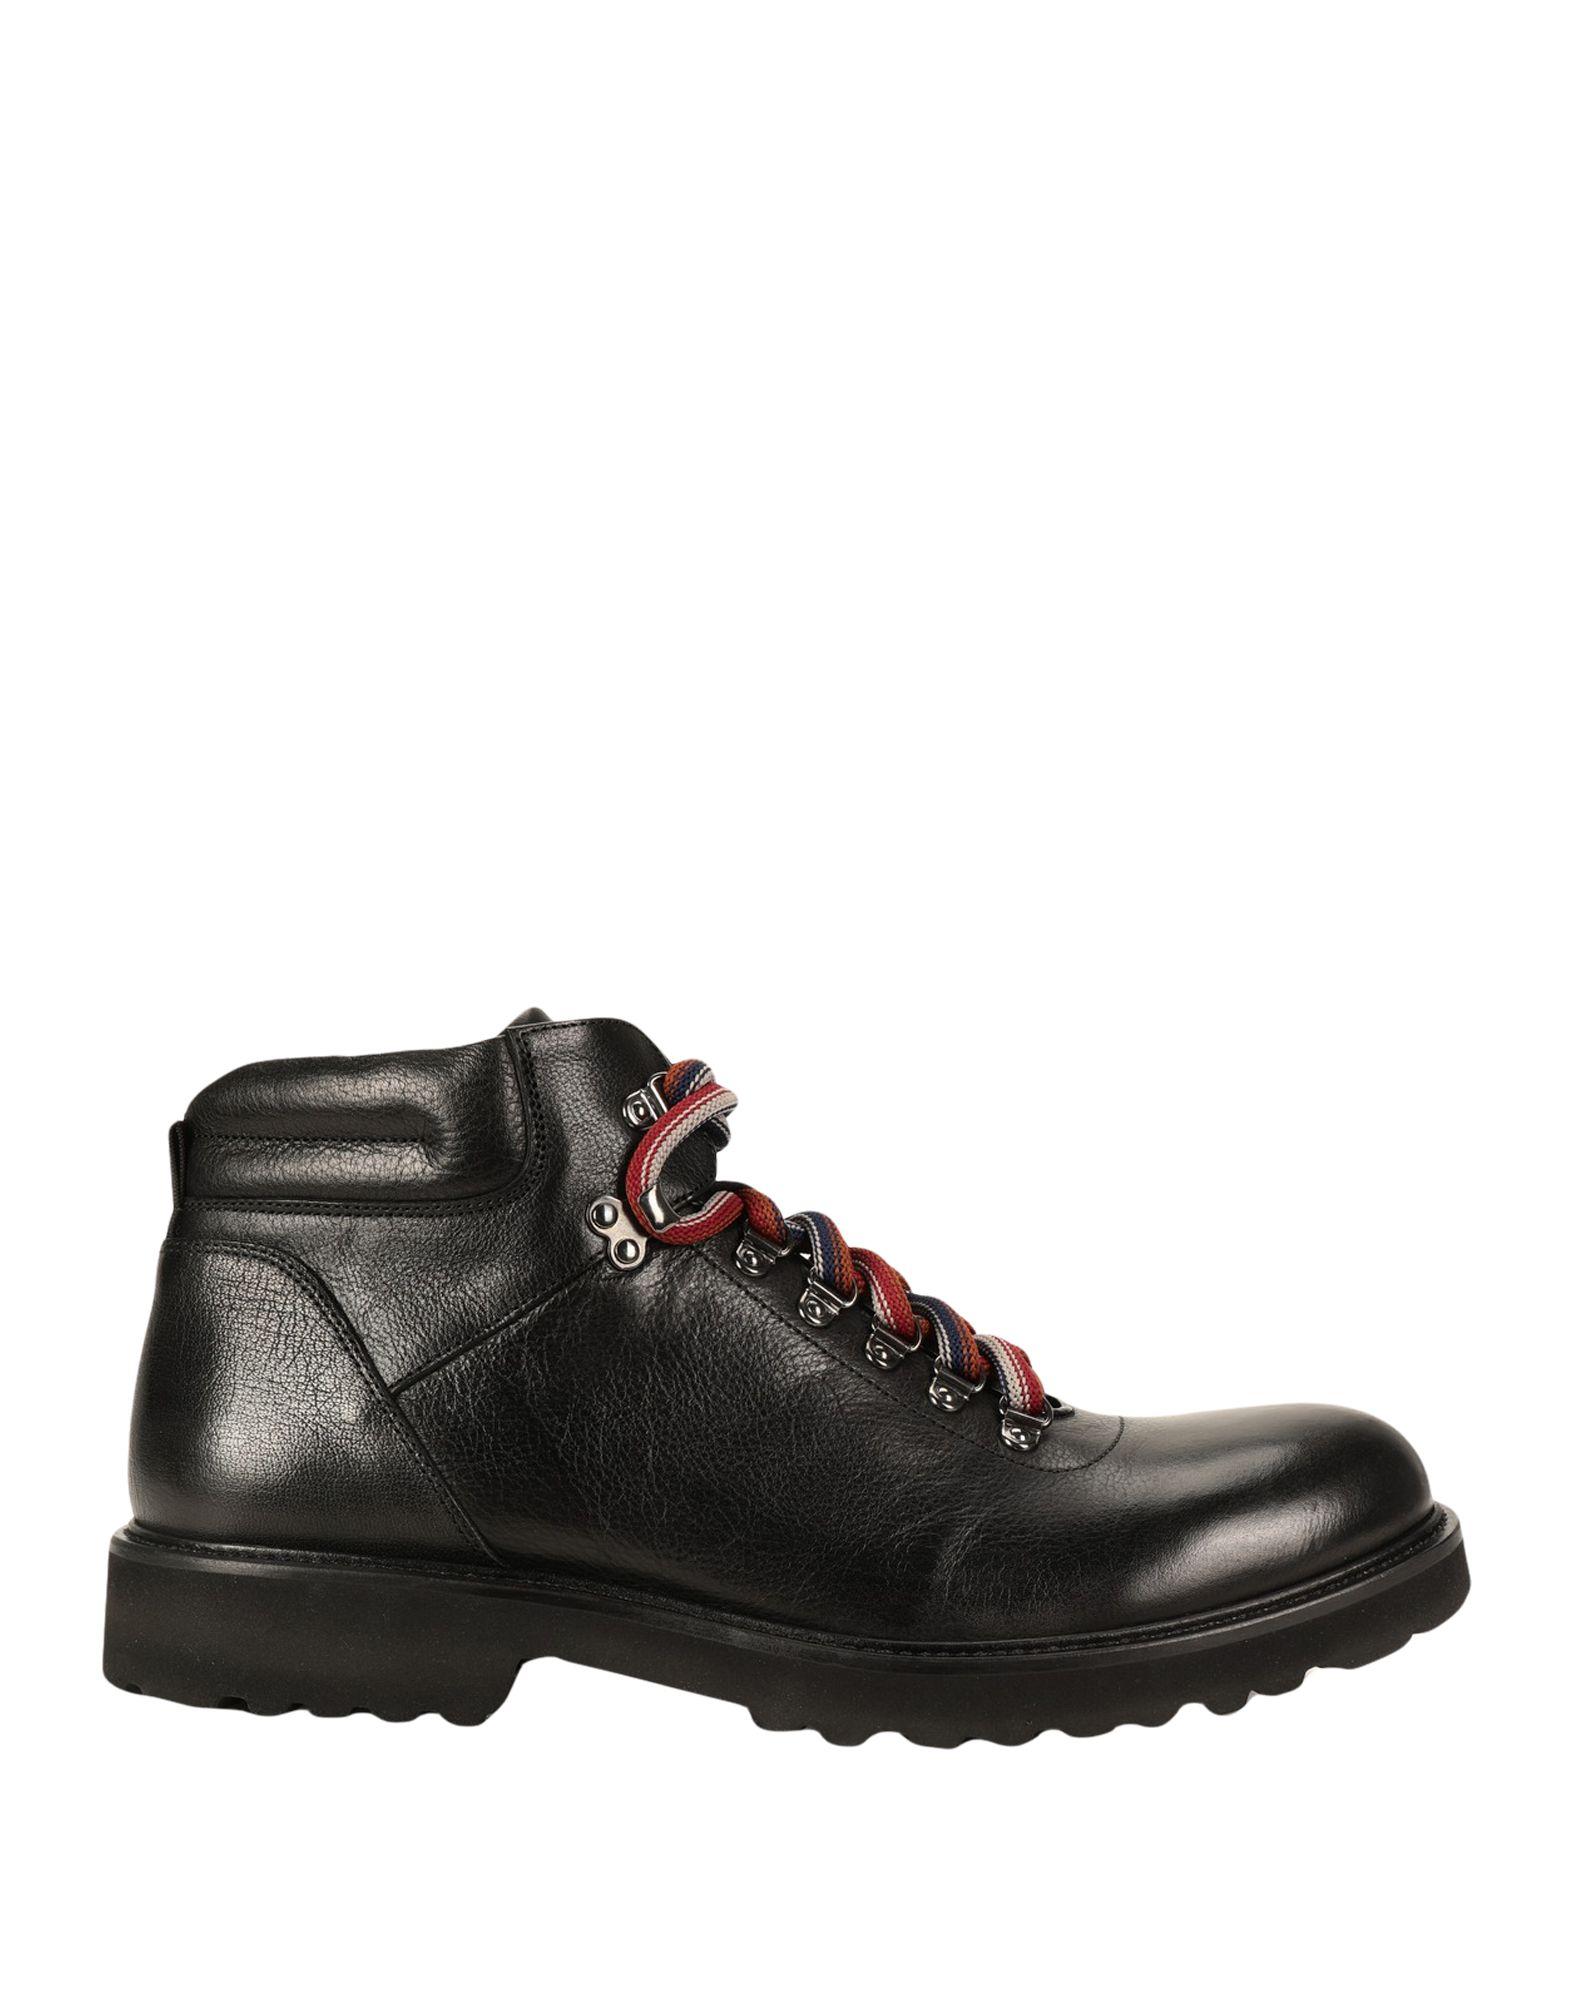 Maldini Ankle Boots in Black for Men - Lyst